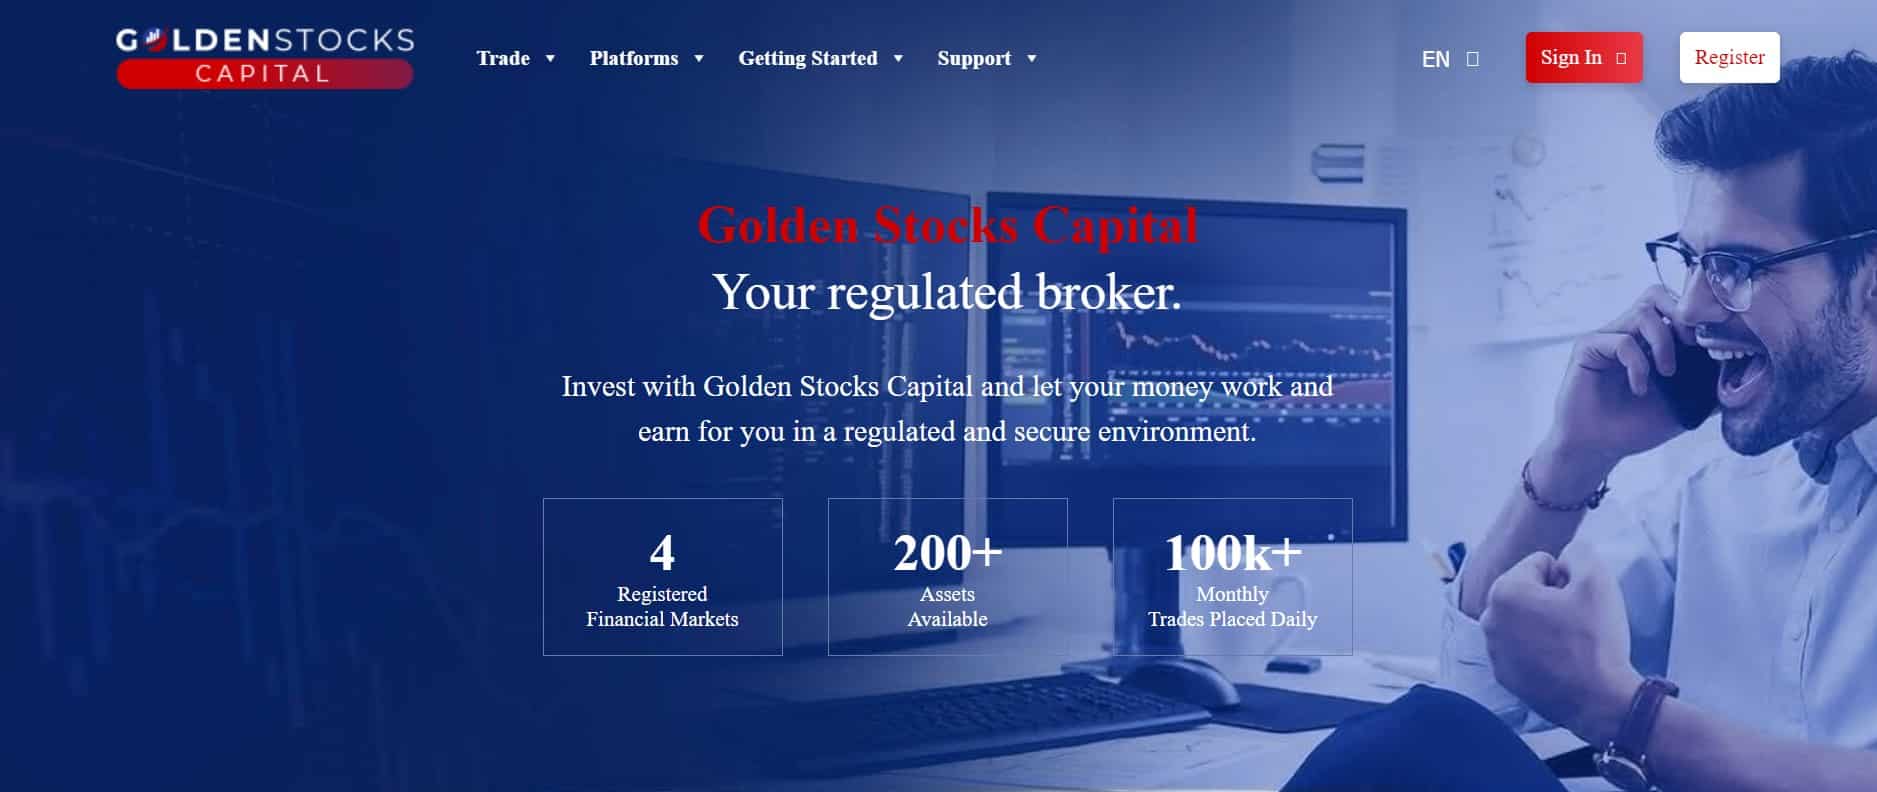 Golden Stocks Capital website